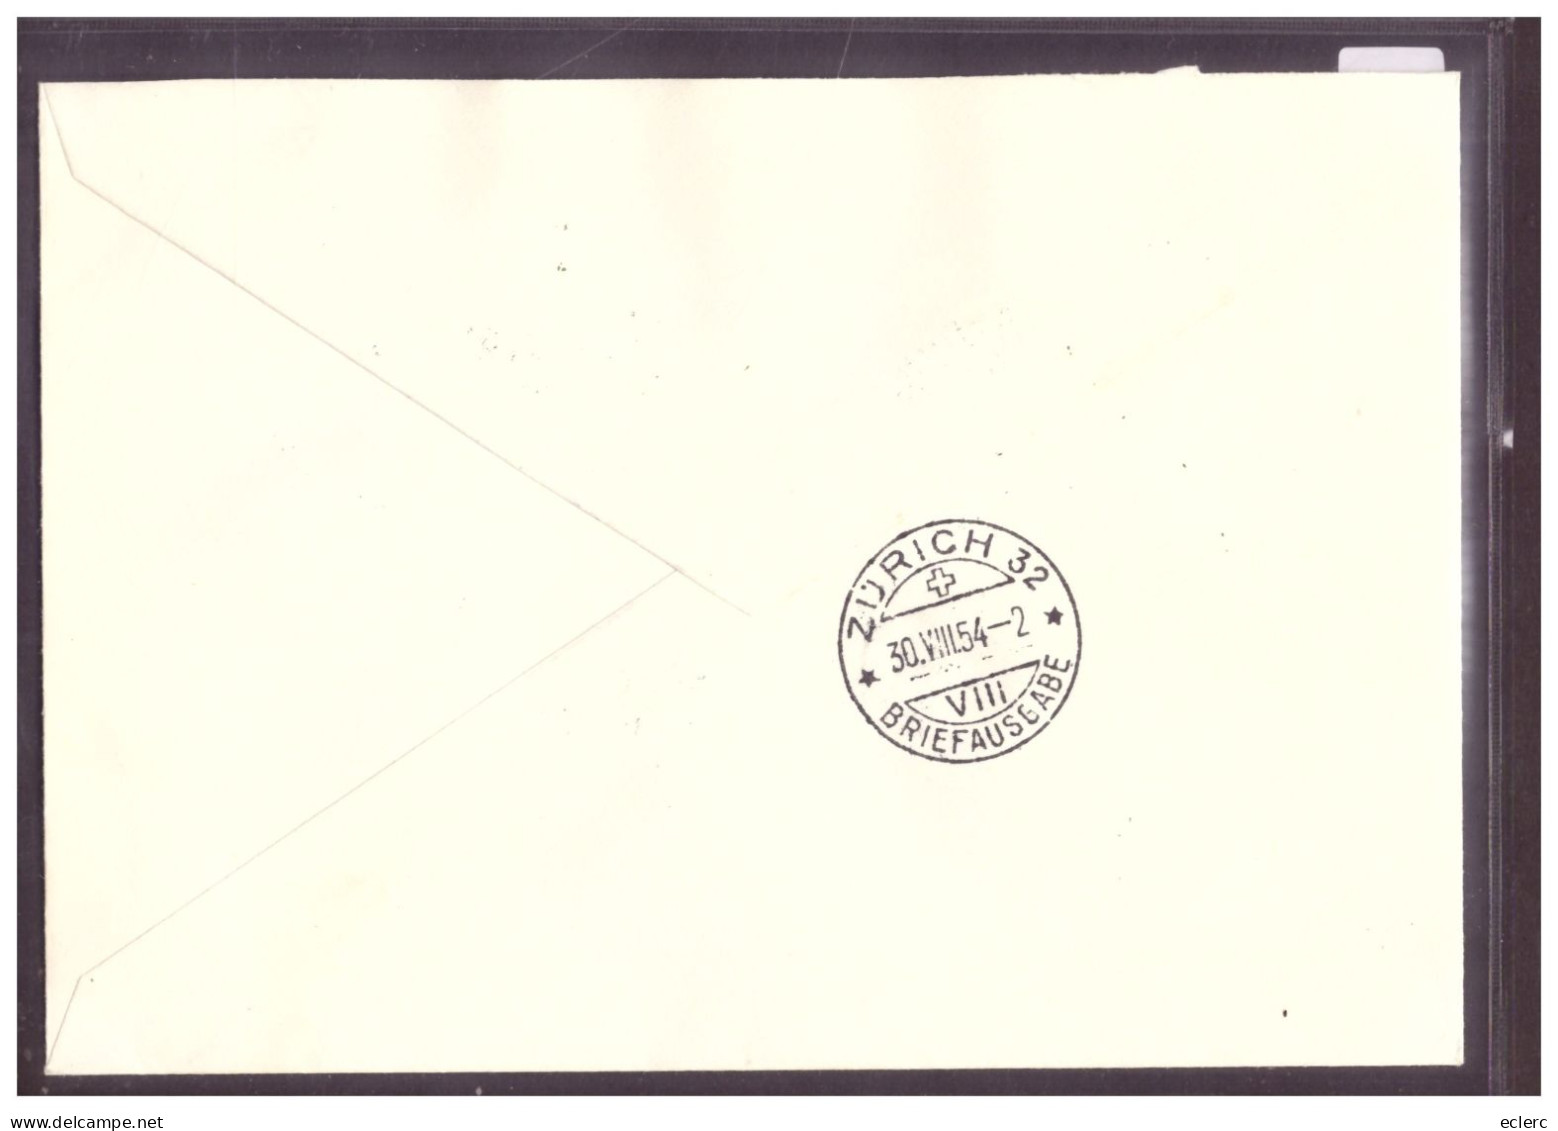 BUREAU DE POSTE AUTOMOBILE - ZÜRICH - BALLONAUFSTIEG 1954 - SCHWEIZ.  AUTOMOBIL POSTBUREAU - Postmark Collection